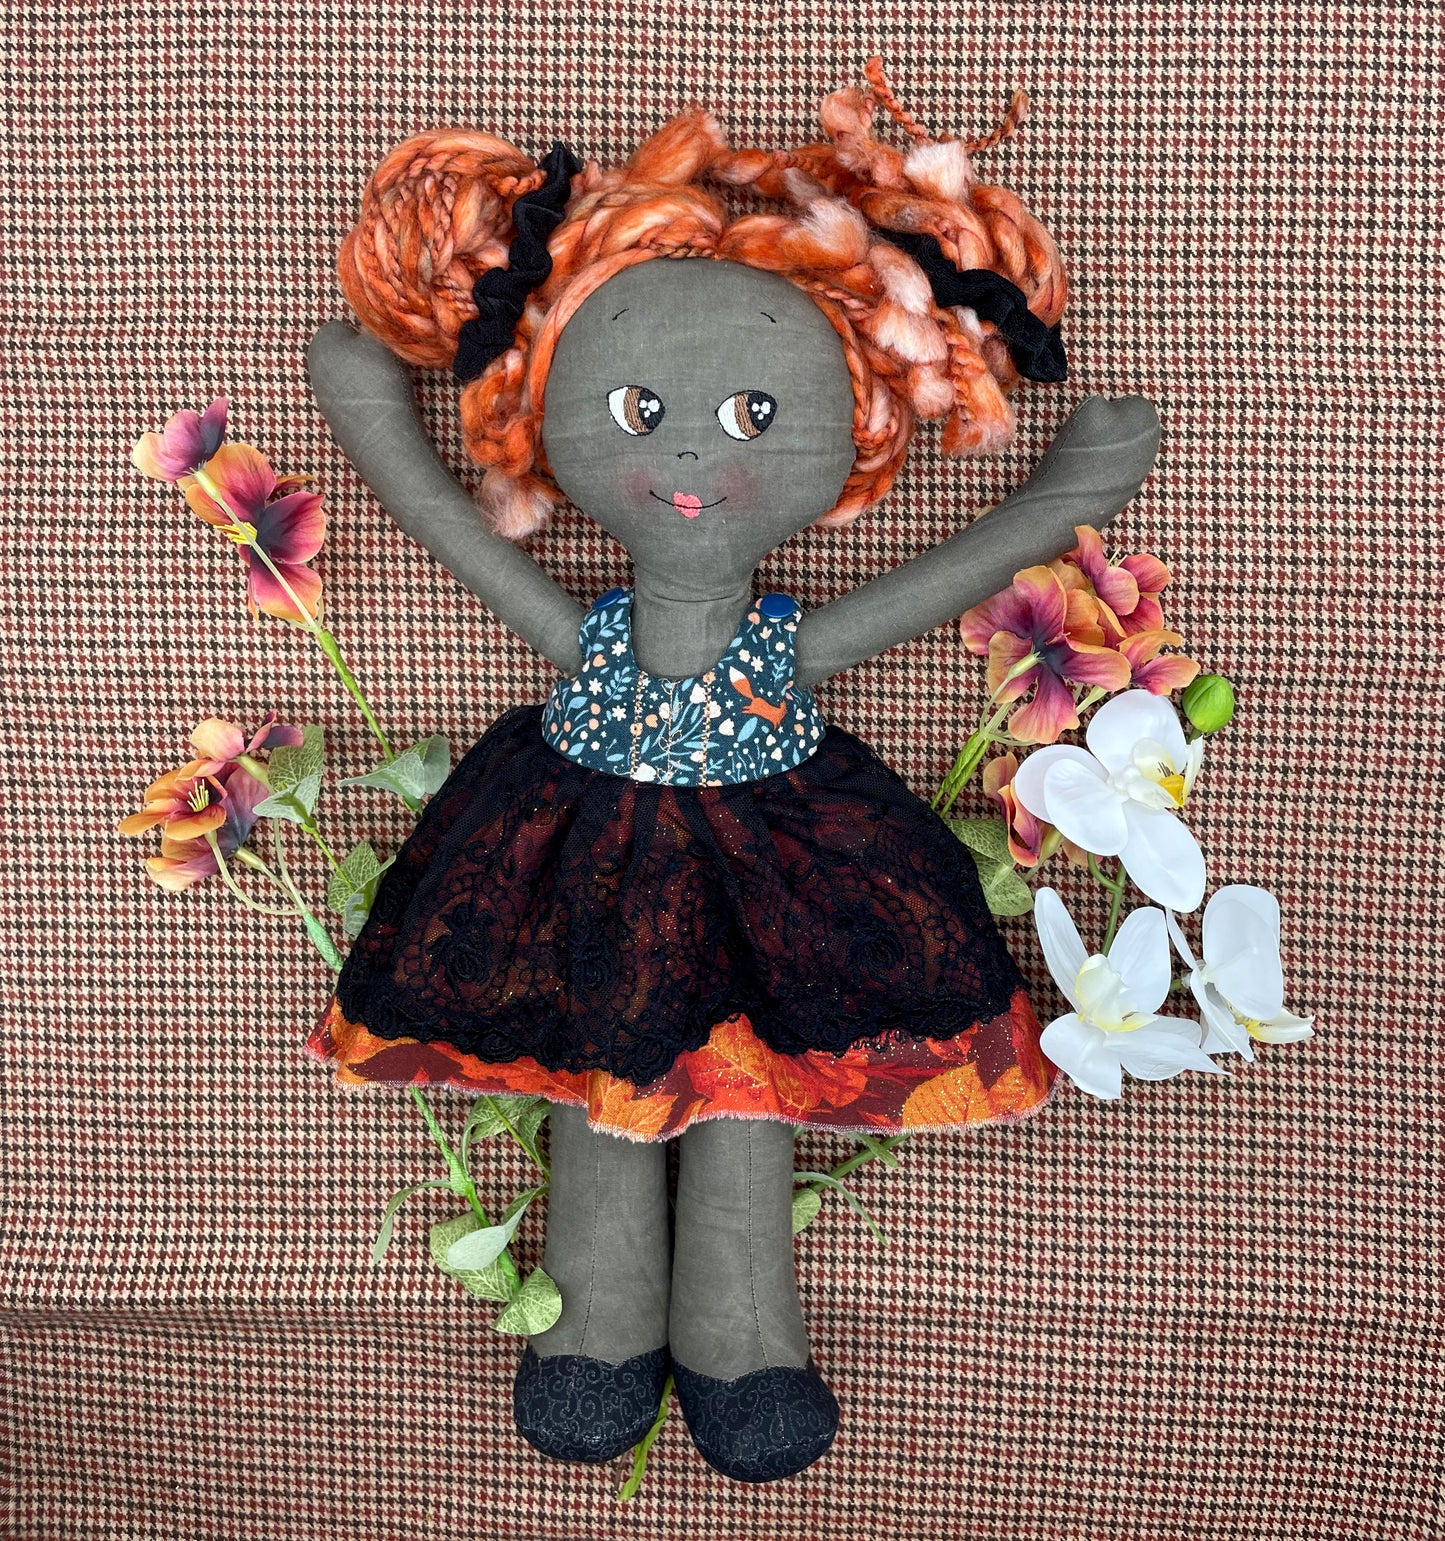 REVERSIBLE DRESS, Handmade Doll, "LARRY", handmade gift, cloth doll, fabric doll, black doll, diverse doll, heirloom doll, Brown Muslin